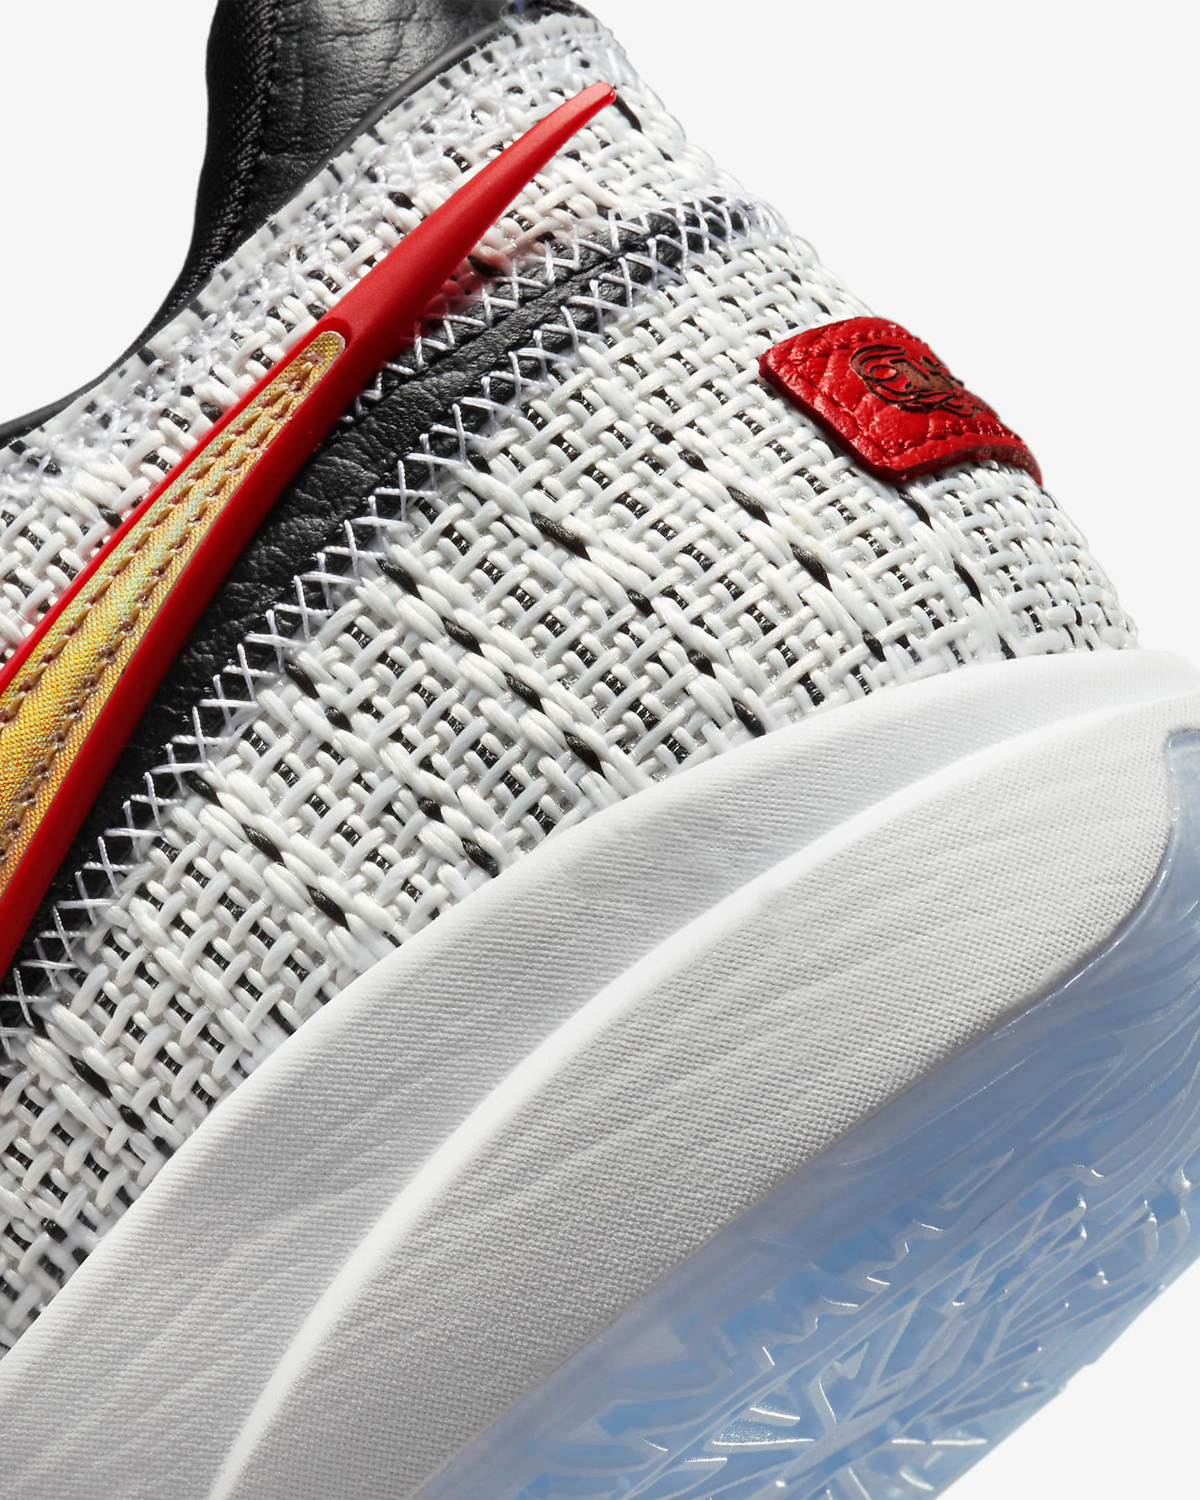 Nike-LeBron-20-The-Debut-White-Metallic-Gold-Black-Red-8